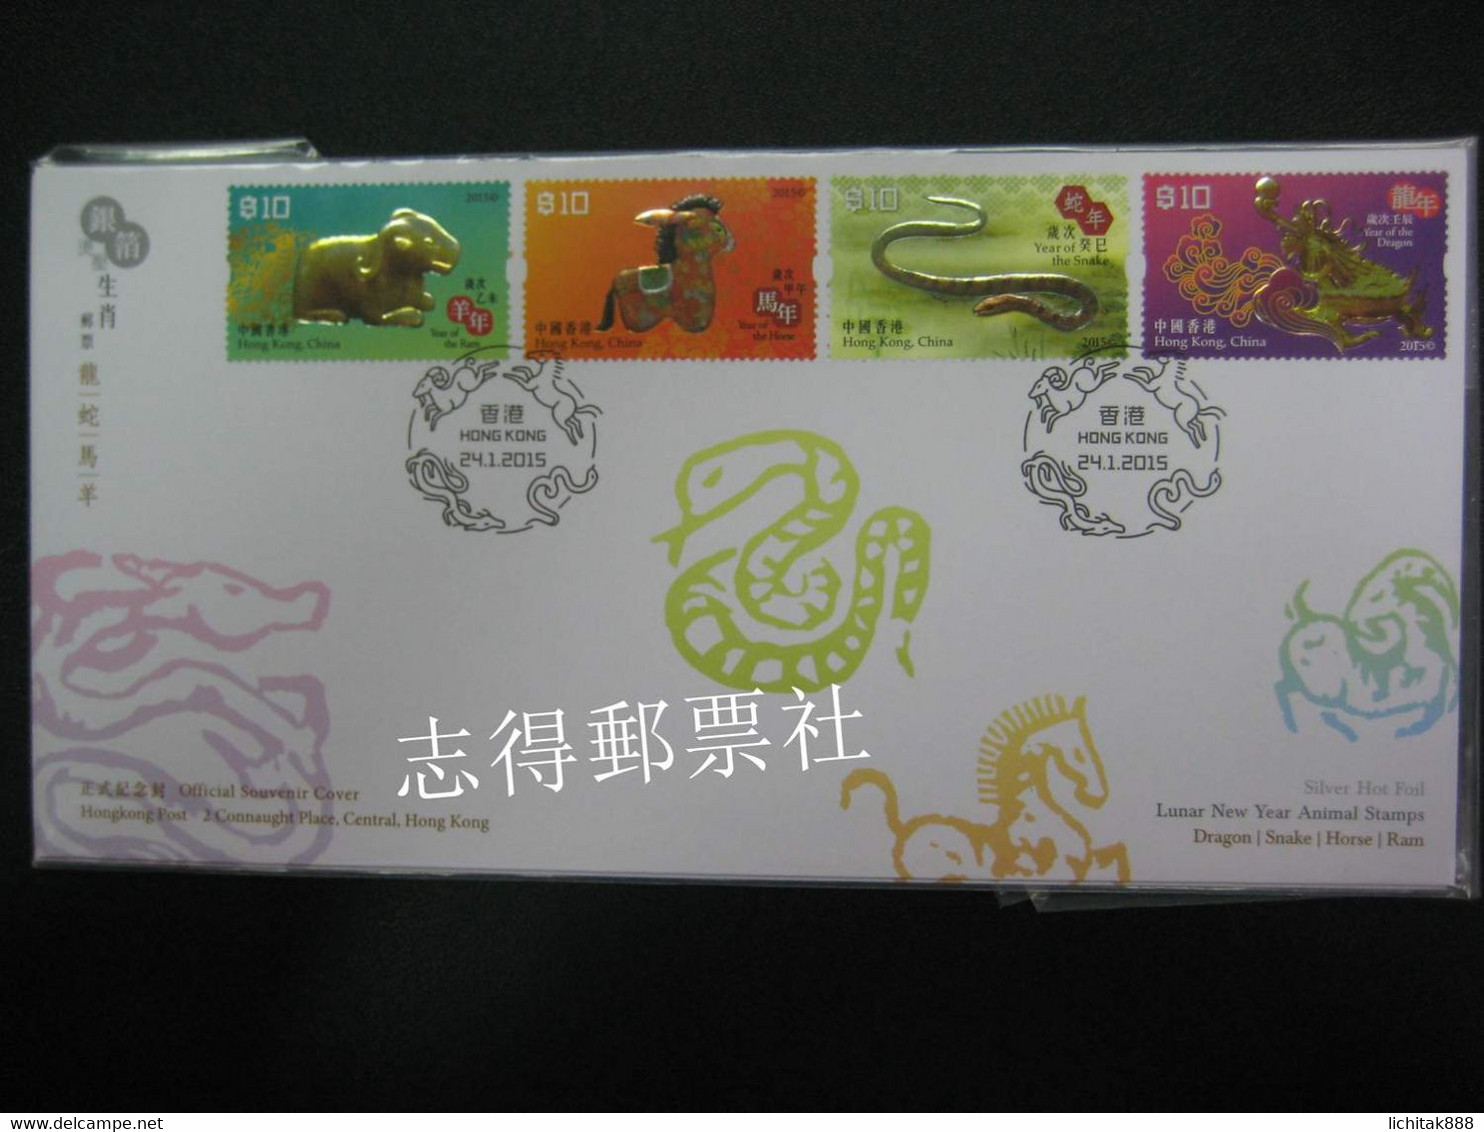 China Hong Kong 2015 Silver Lunar New Year Dragon Snake Horse Ram Stamps FDC - FDC